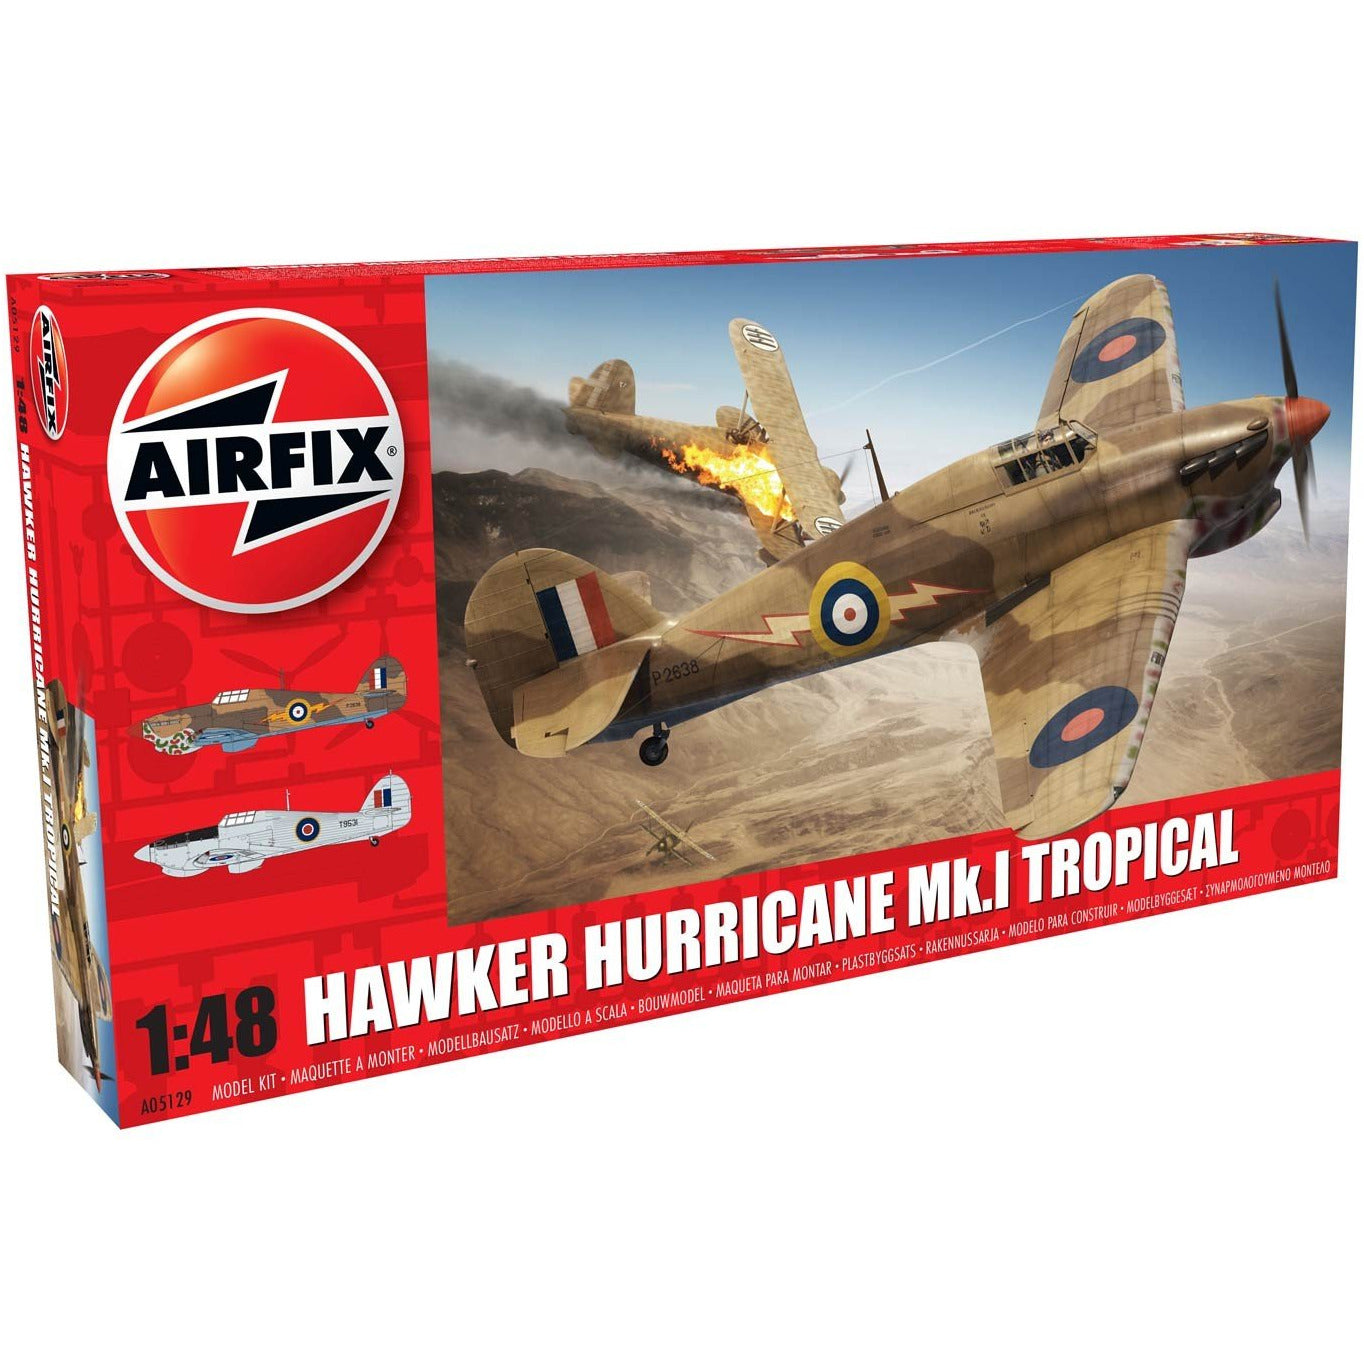 Hawker Hurricane Mk. I Tropical 1/48 by Airfix